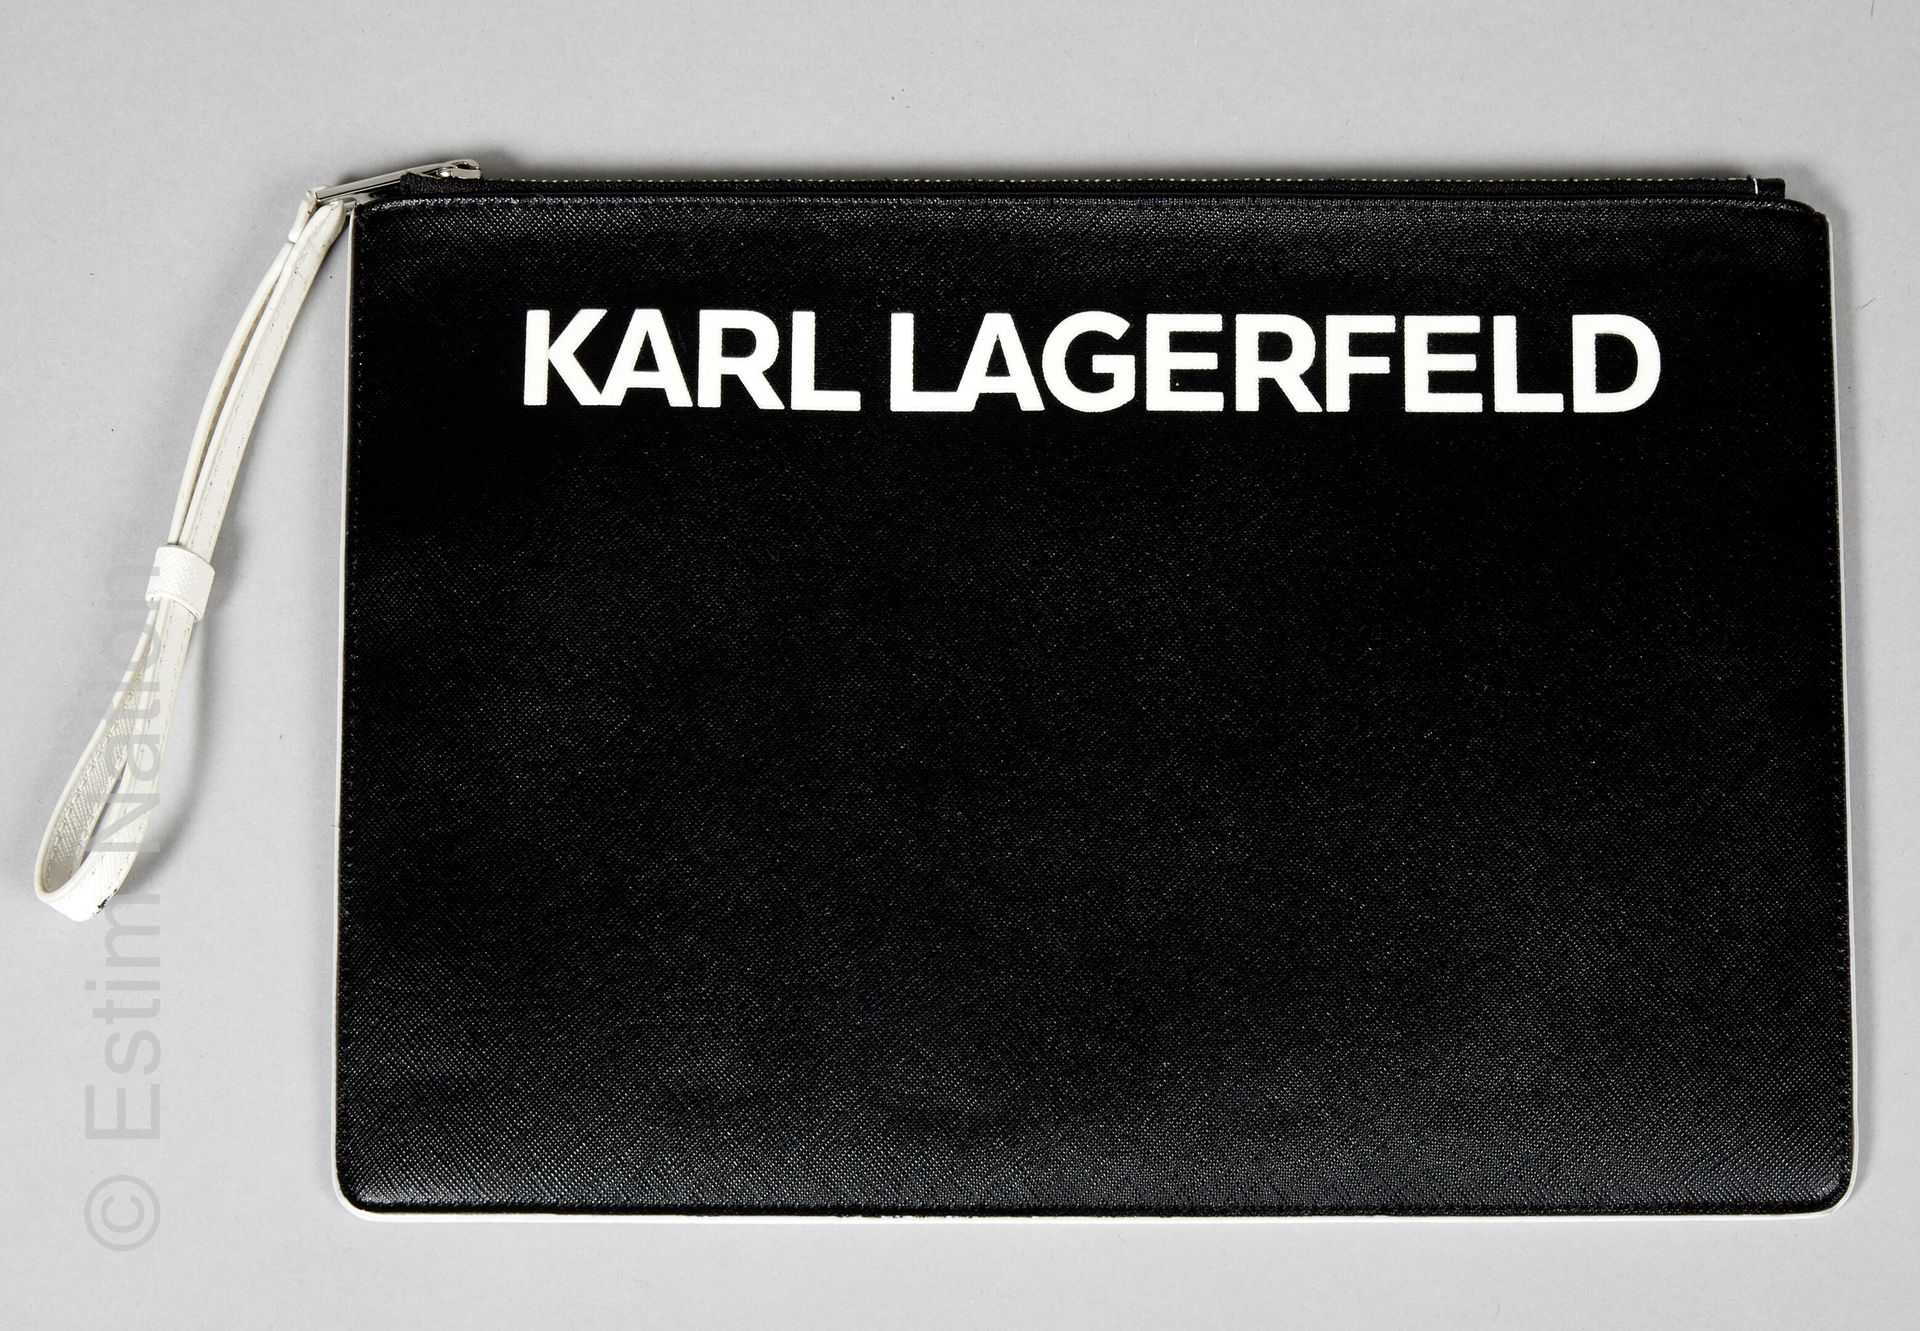 Karl LAGERFELD Zipped POCKET in black imitation leather with logo (21 x 29 cm)